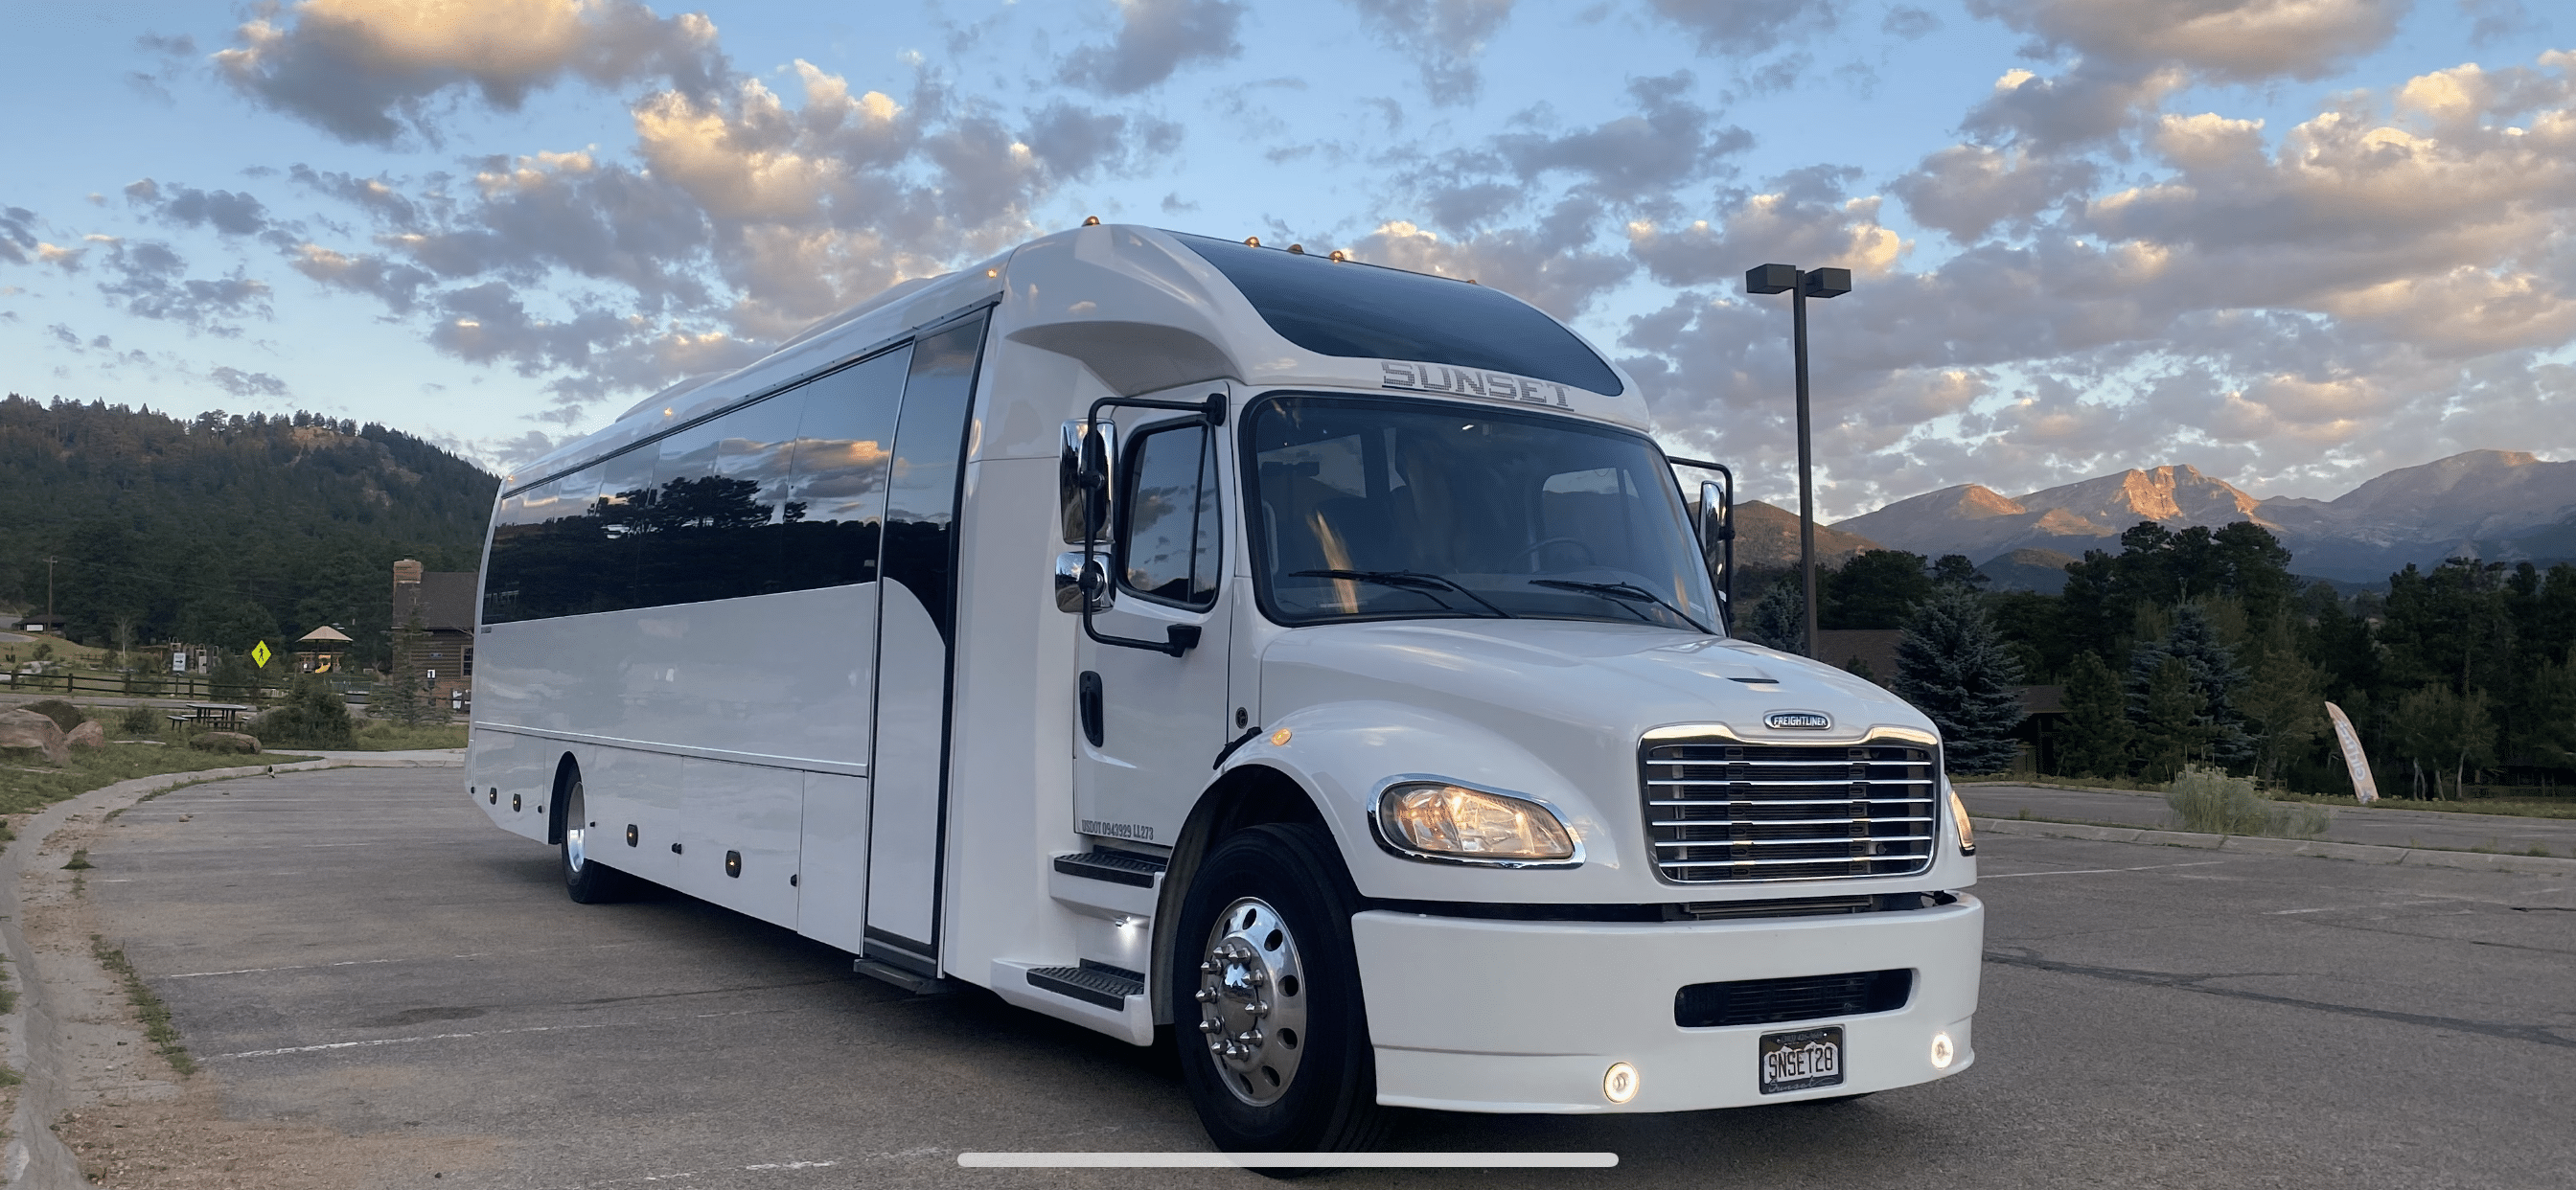 A white luxury coach bus